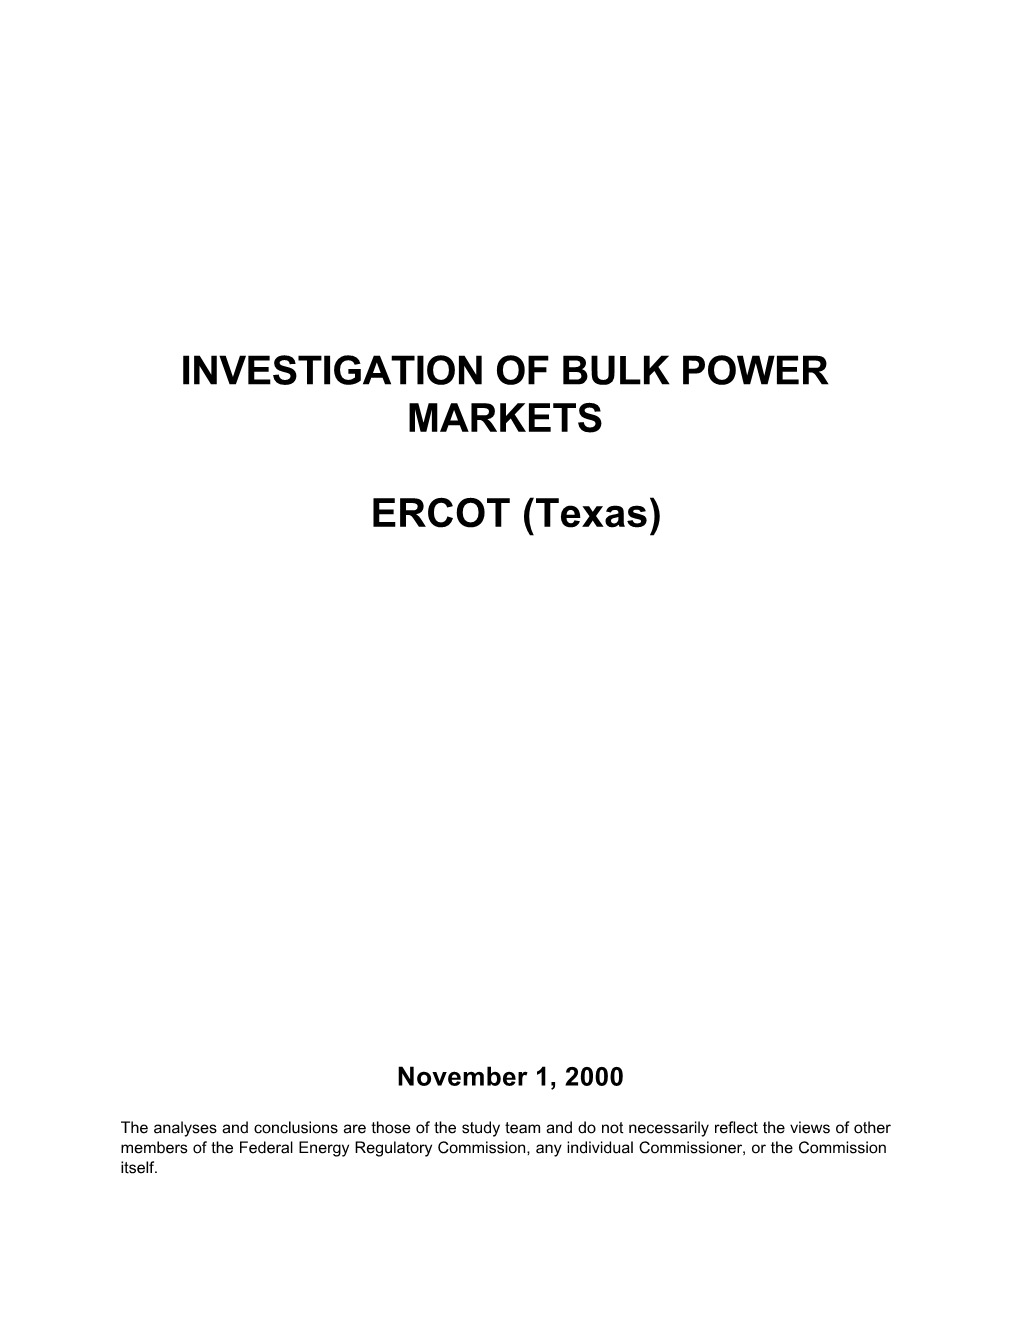 INVESTIGATION of BULK POWER MARKETS ERCOT (Texas)